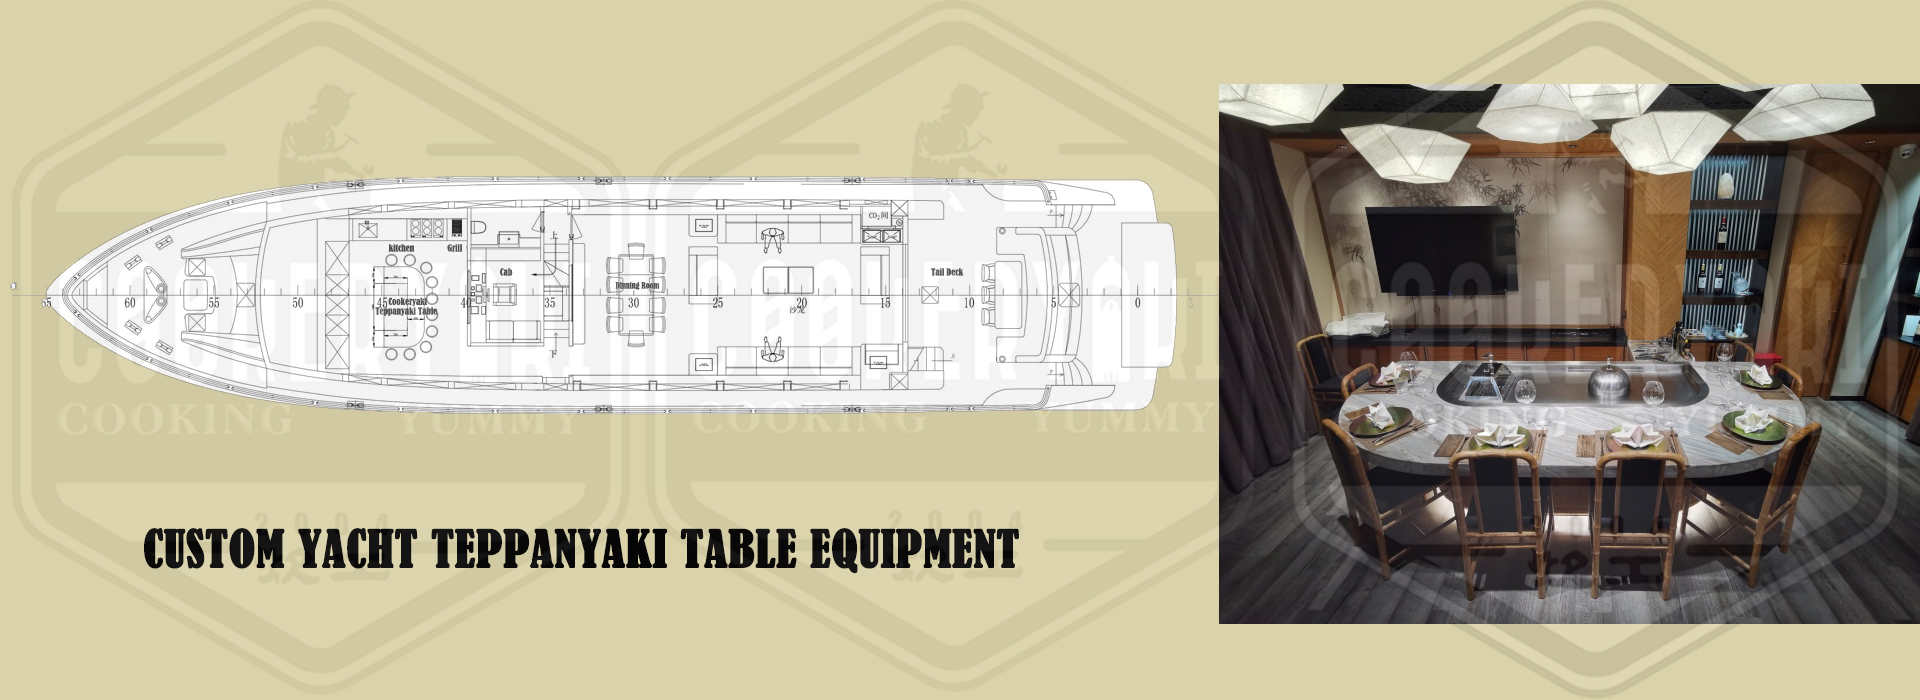 Commercial Teppanyaki Grill Table Equipment